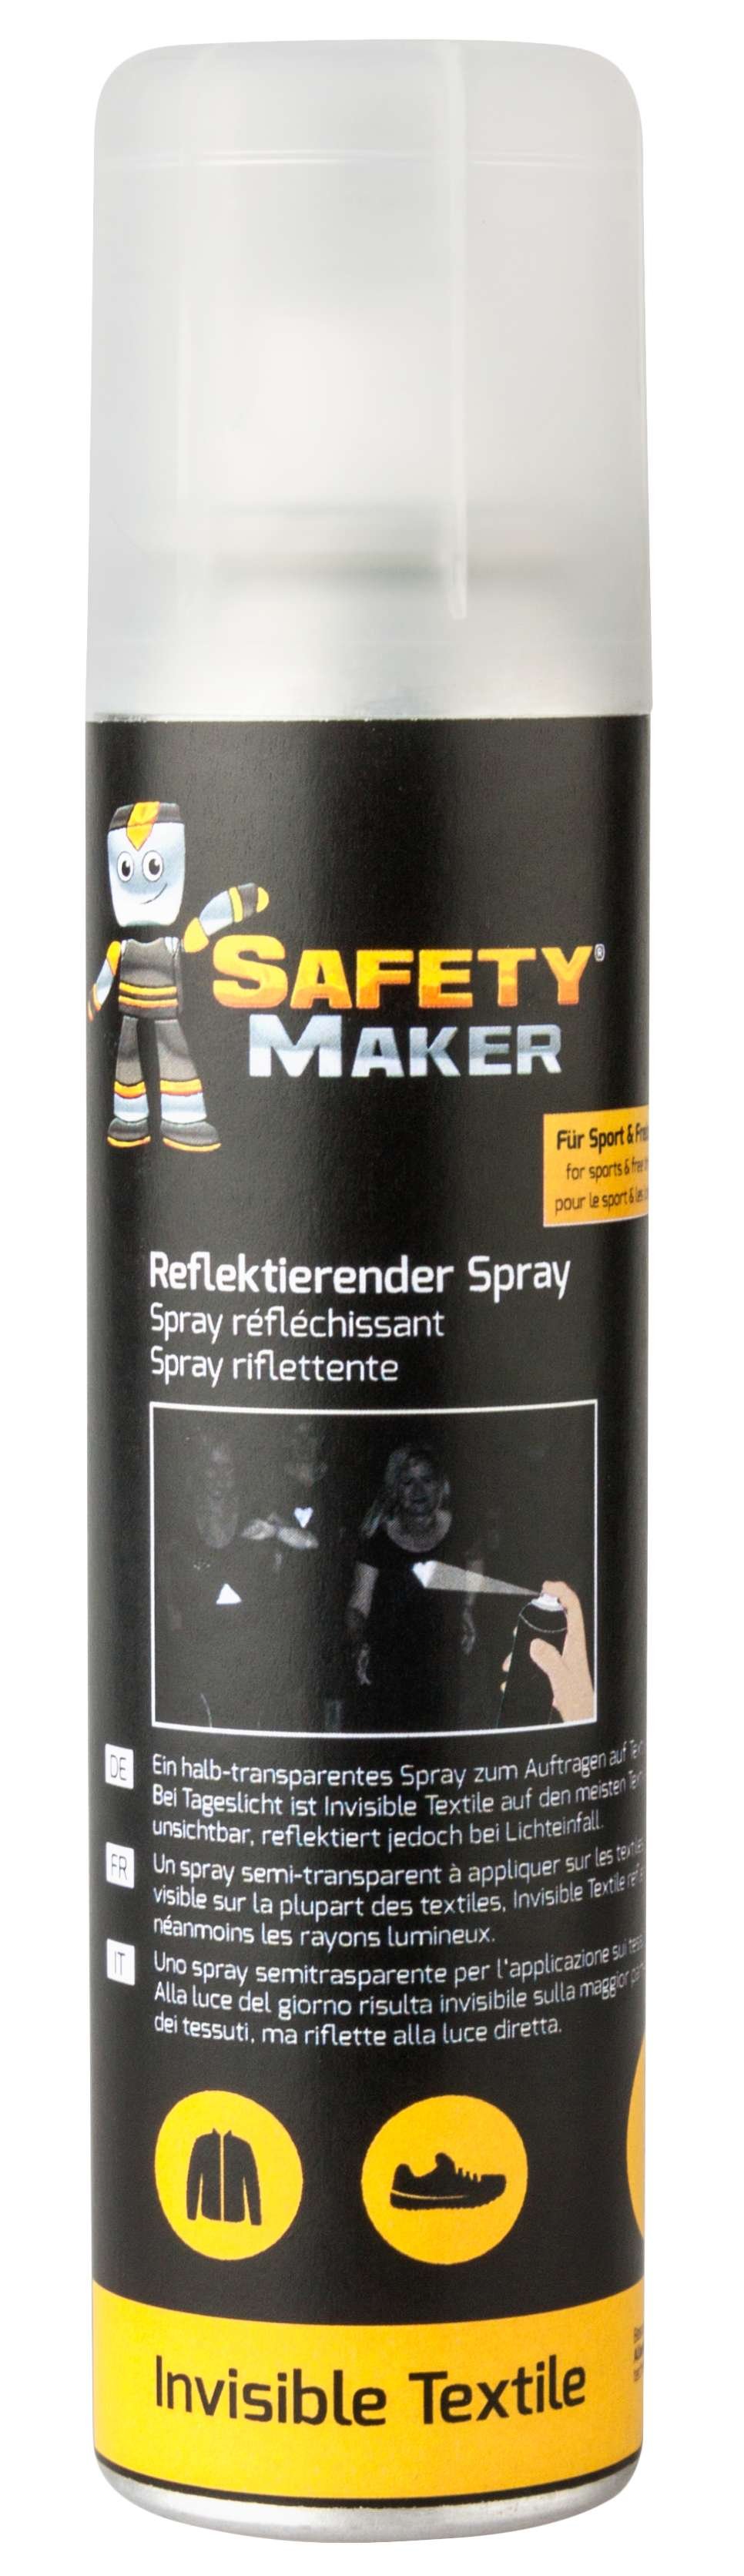 Safety Maker Spray réflecteur Textile invisible 100 ml